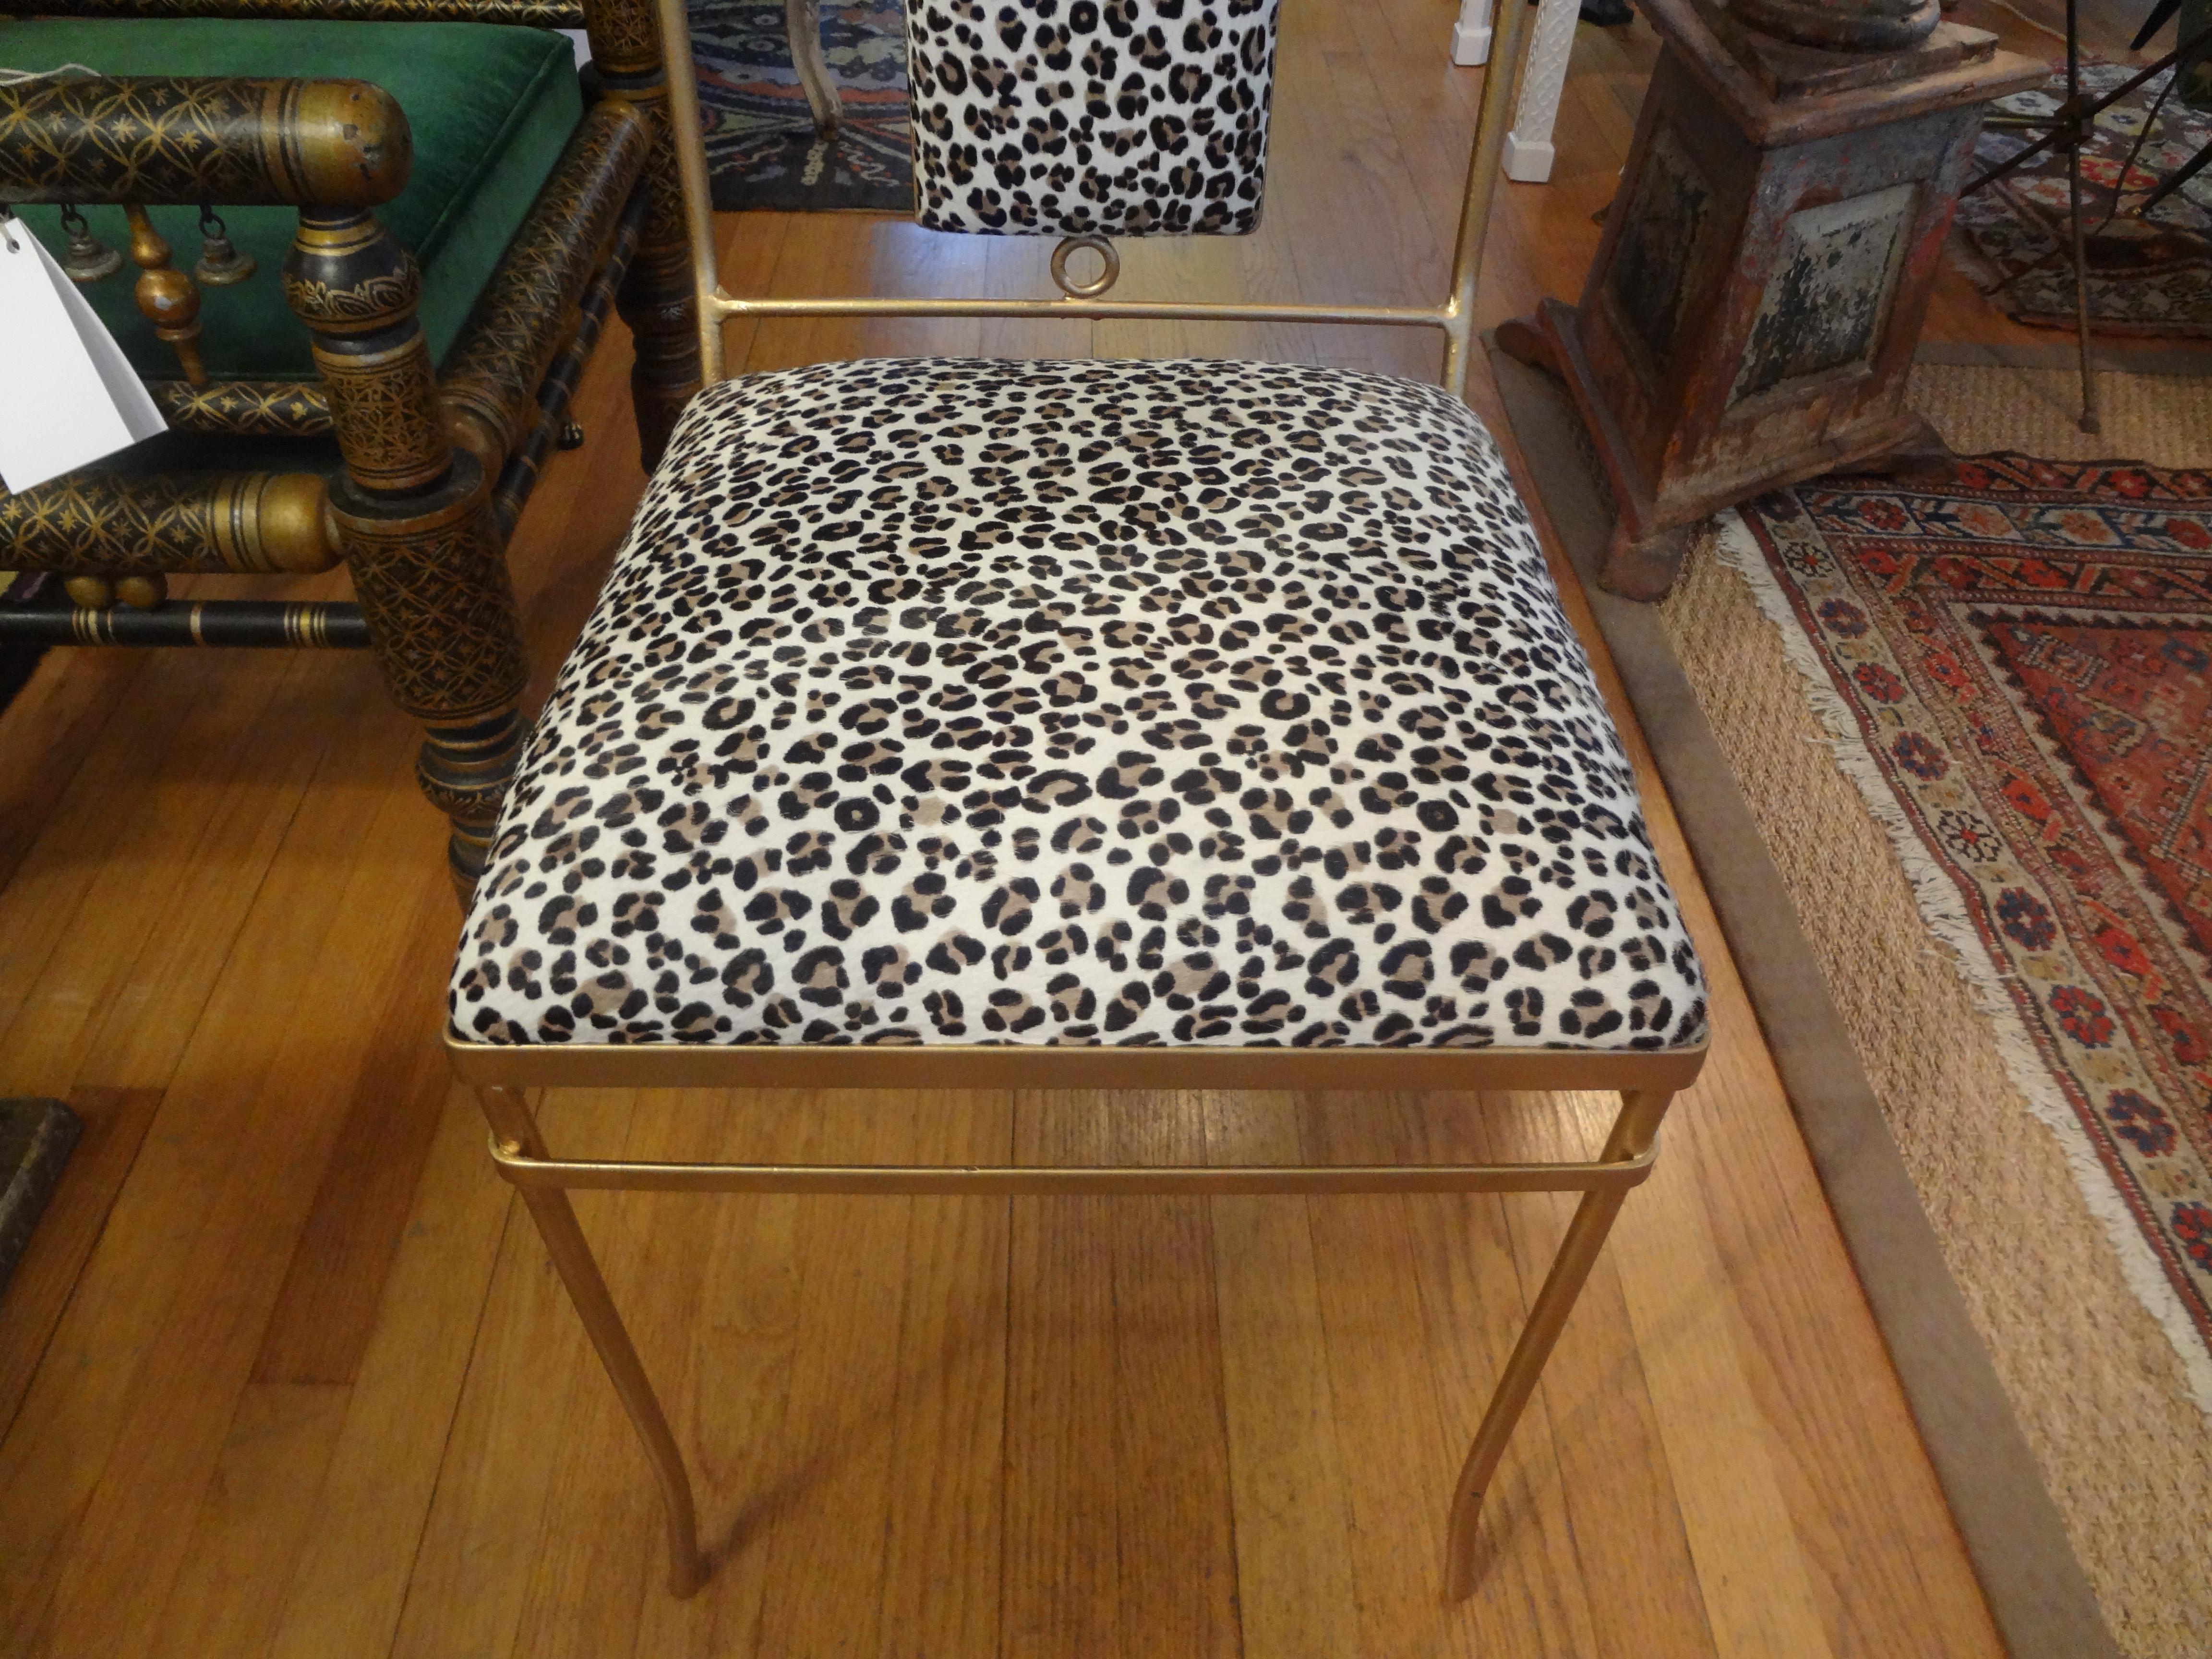 Mid-Century Modern Italian Gilt Iron Chair with Leopard Print Hide Upholstery, Gio Ponti Inspired